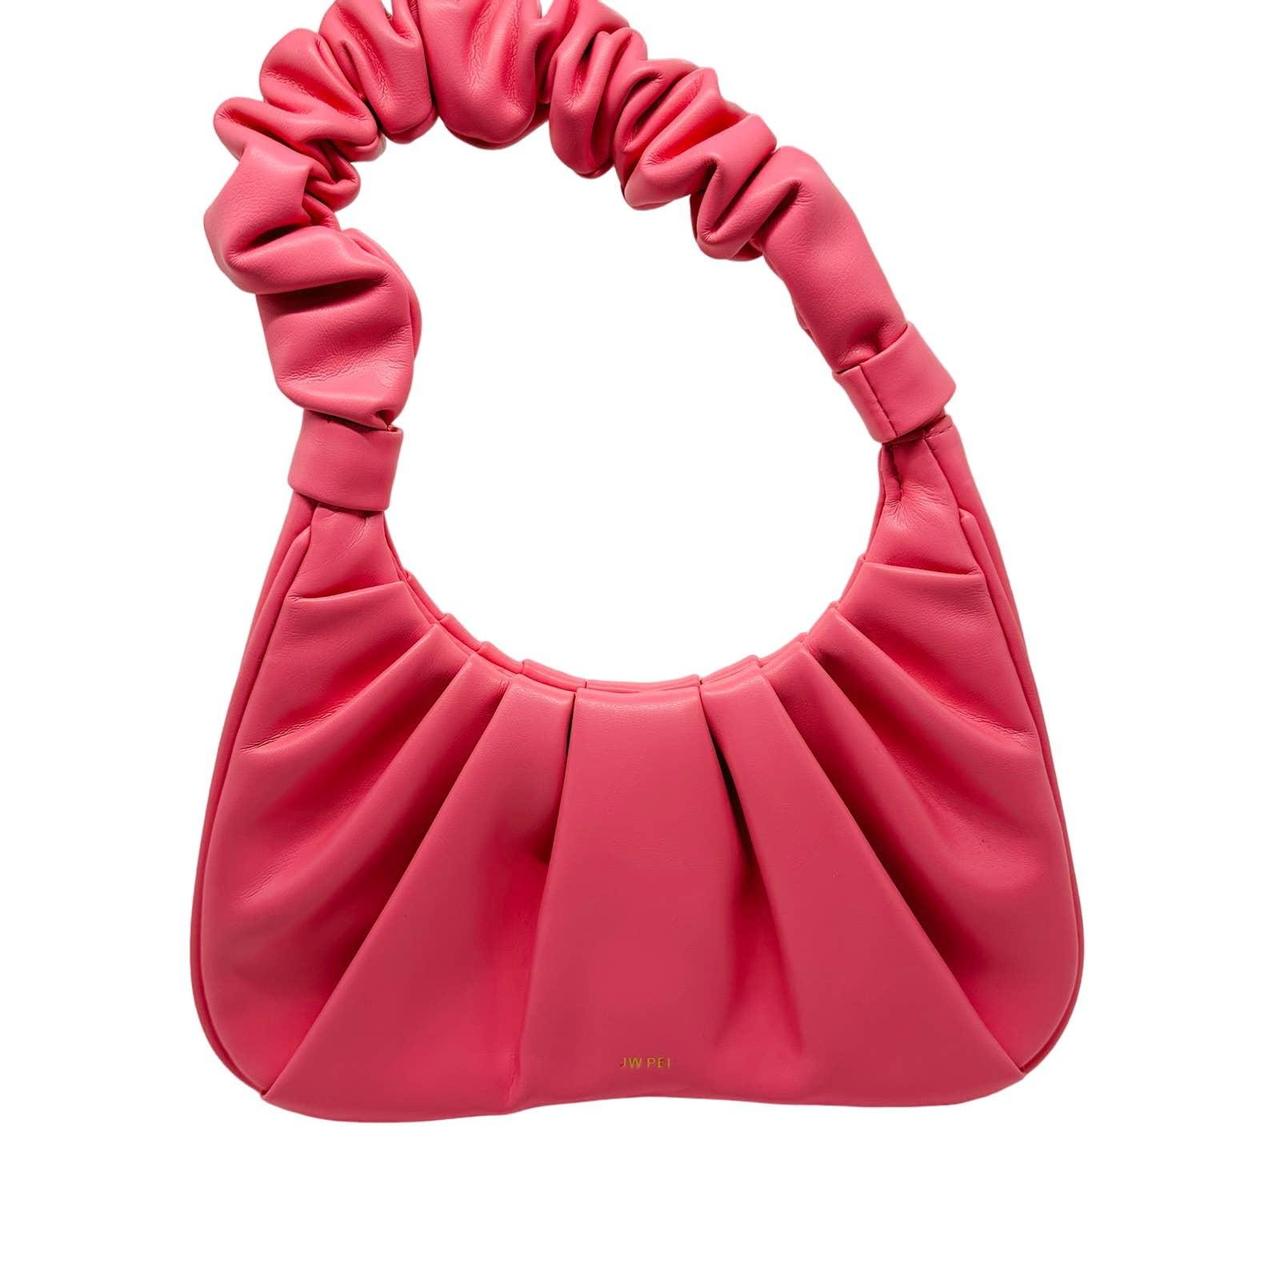 JW PEI, Bags, New Jw Pei Womens Gabbi Ruched Hobo Handbag